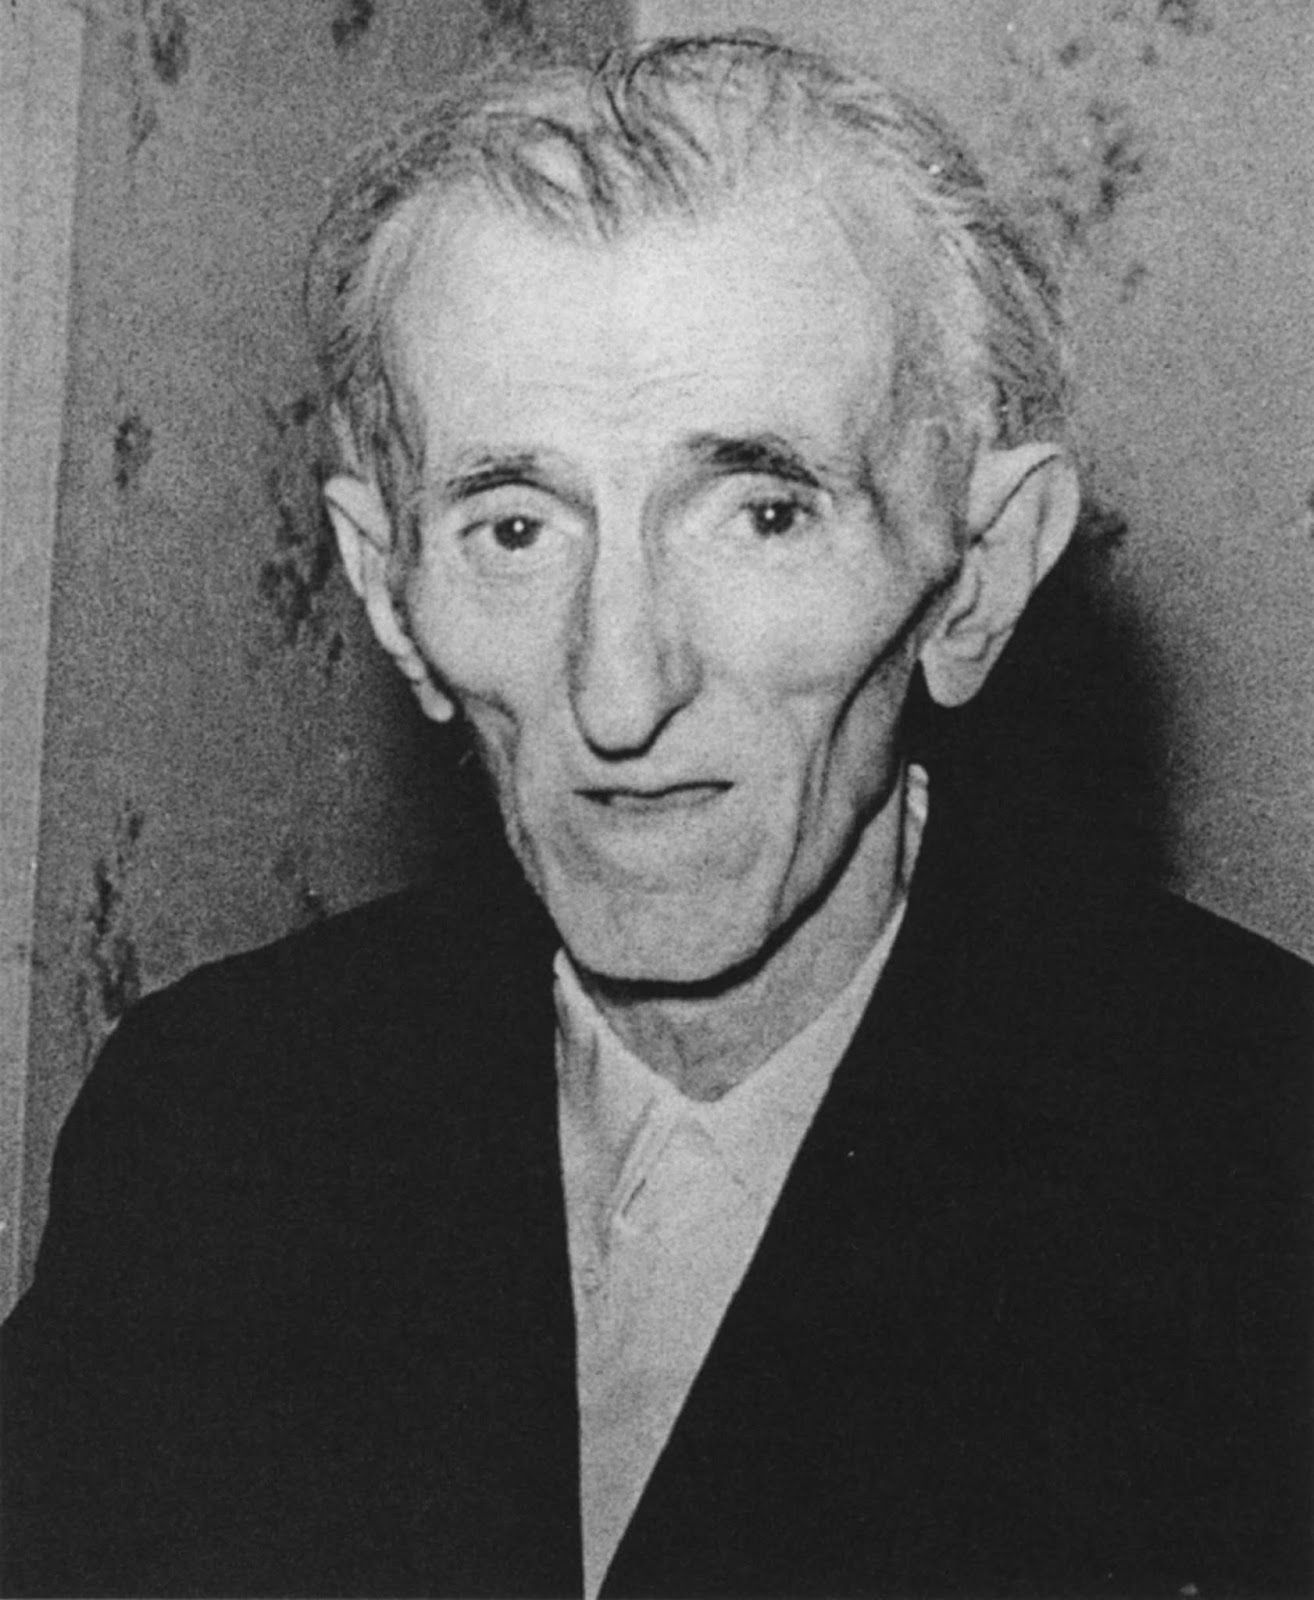  La dernière photo de Nikola Tesla - 1943